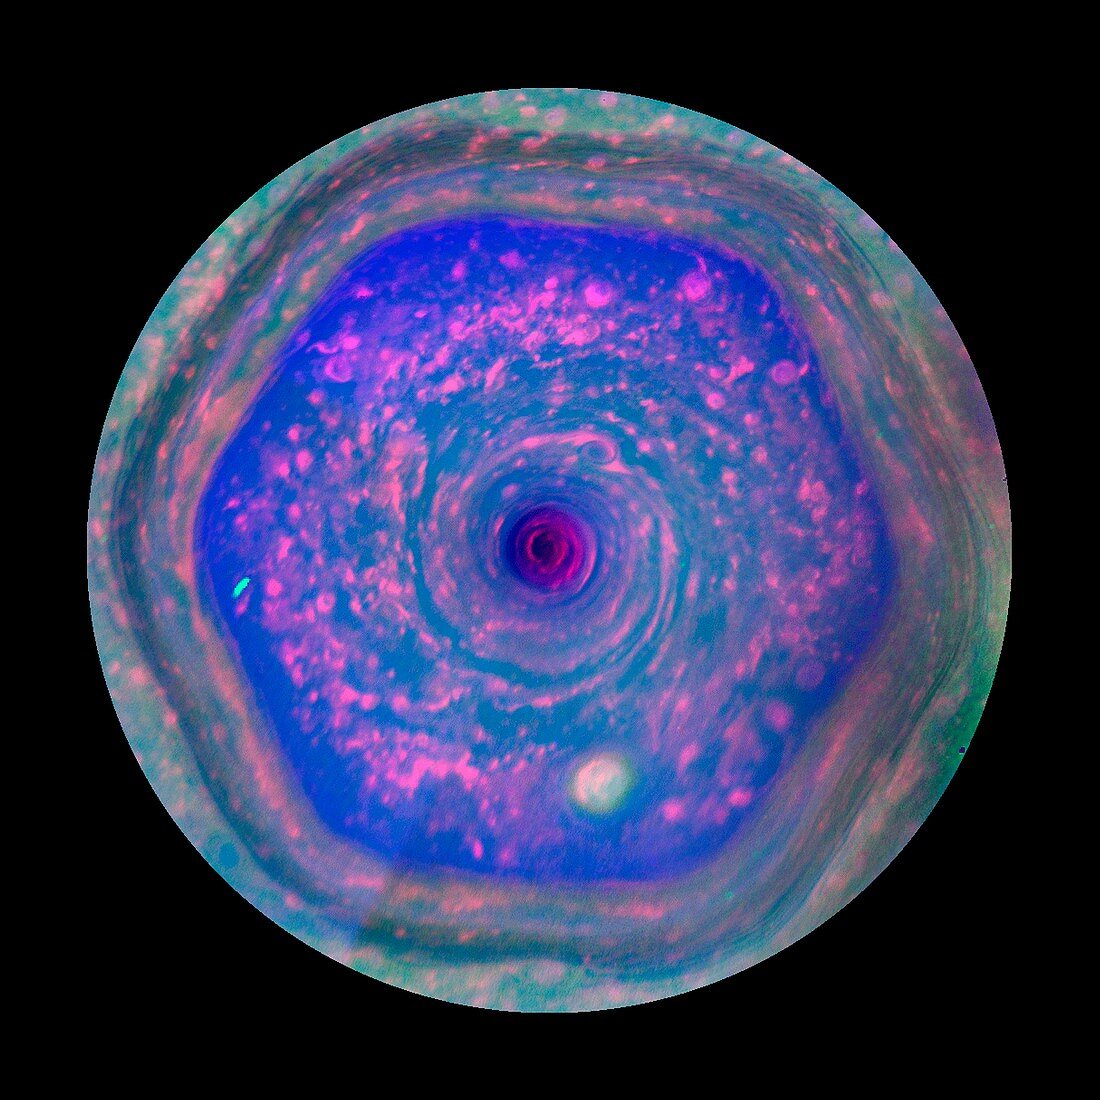 Saturn's north pole, Cassini image